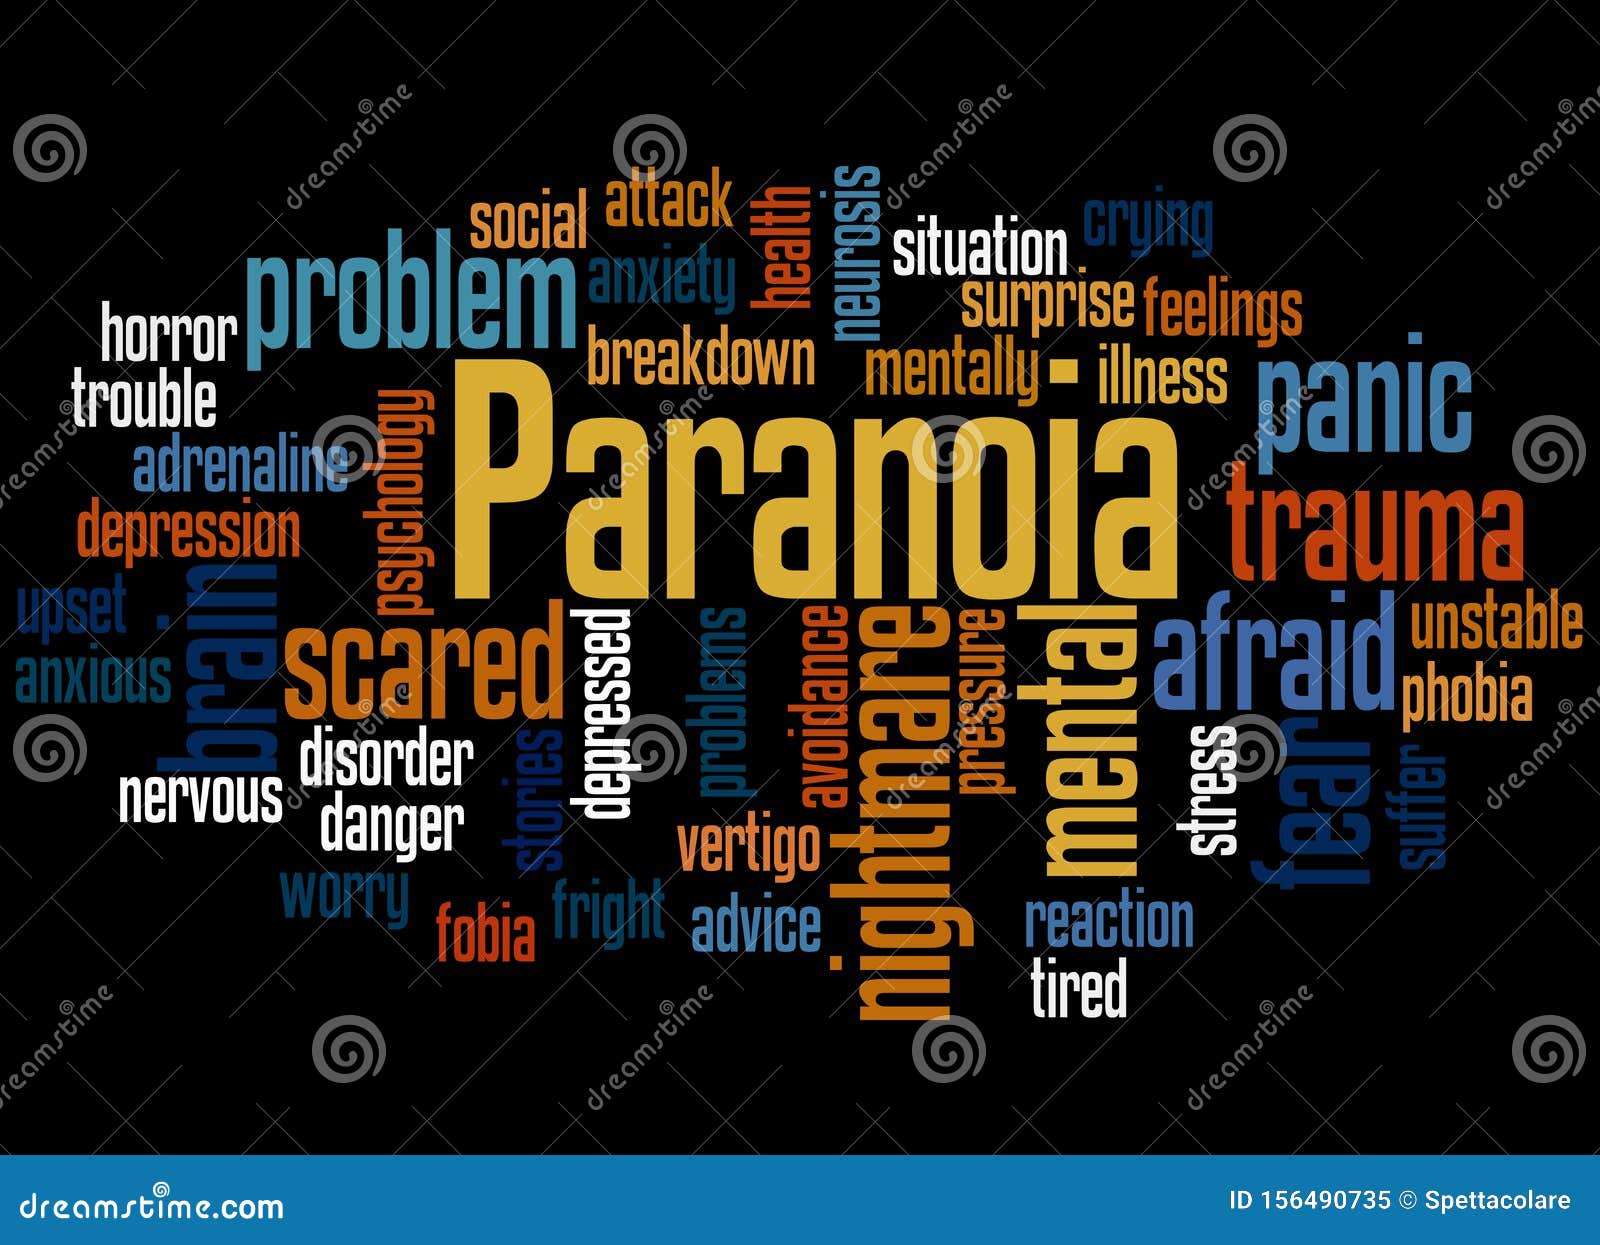 paranoia word cloud concept 4